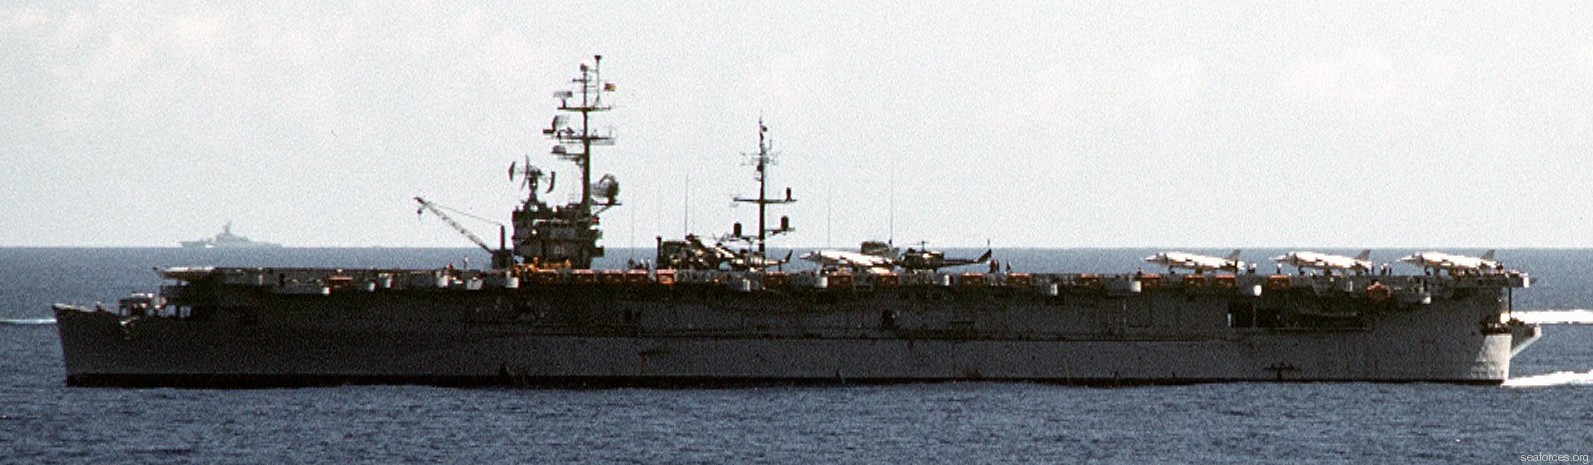 r-01 sps dedalo aircraft carrier spanish navy armada espanola 07